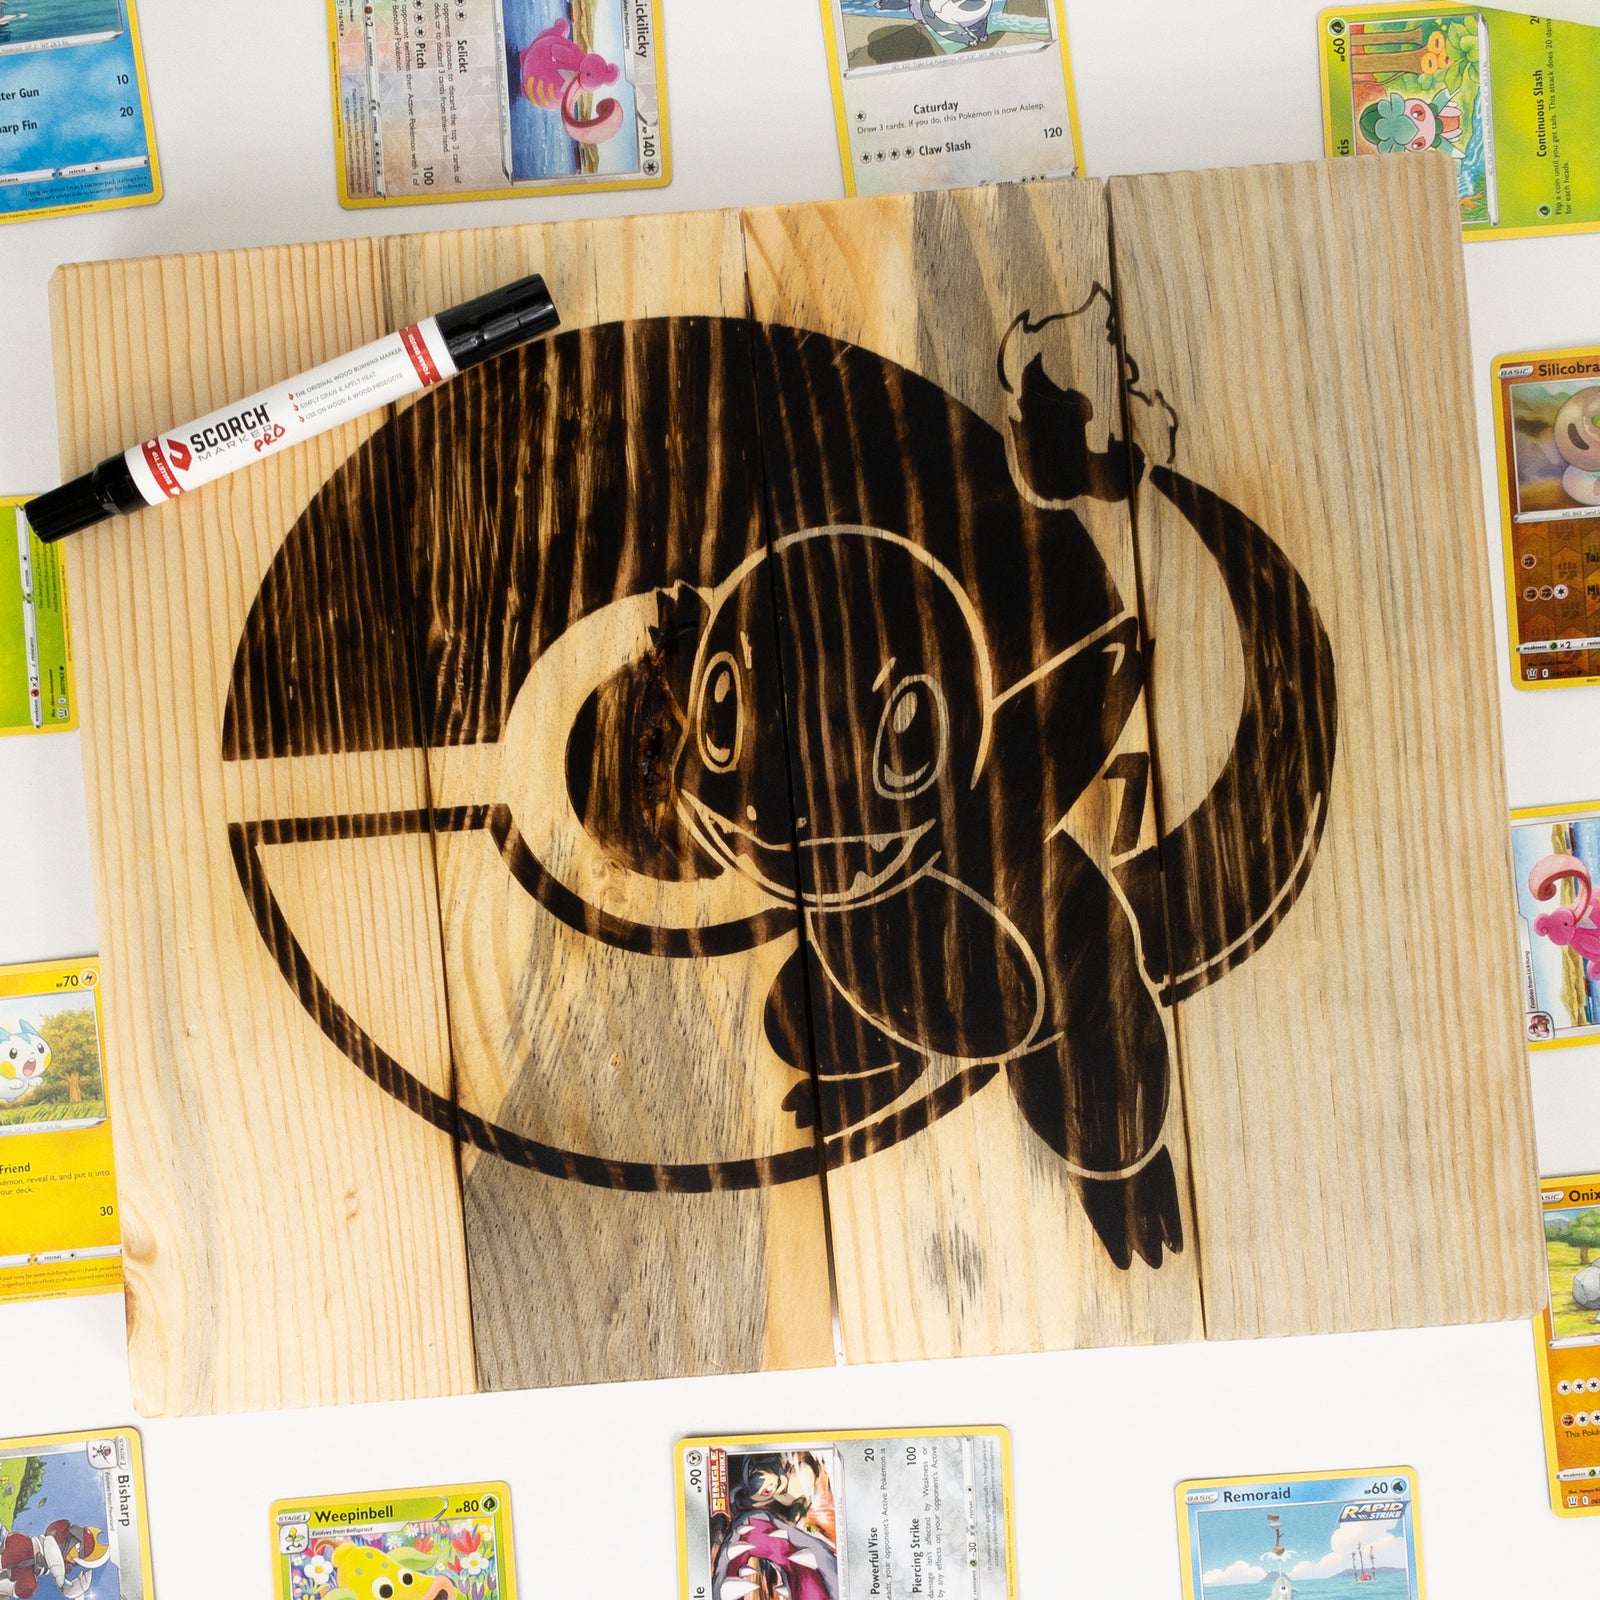 DIY Wood Burning Stencil Craft #TigerStrypesBlog